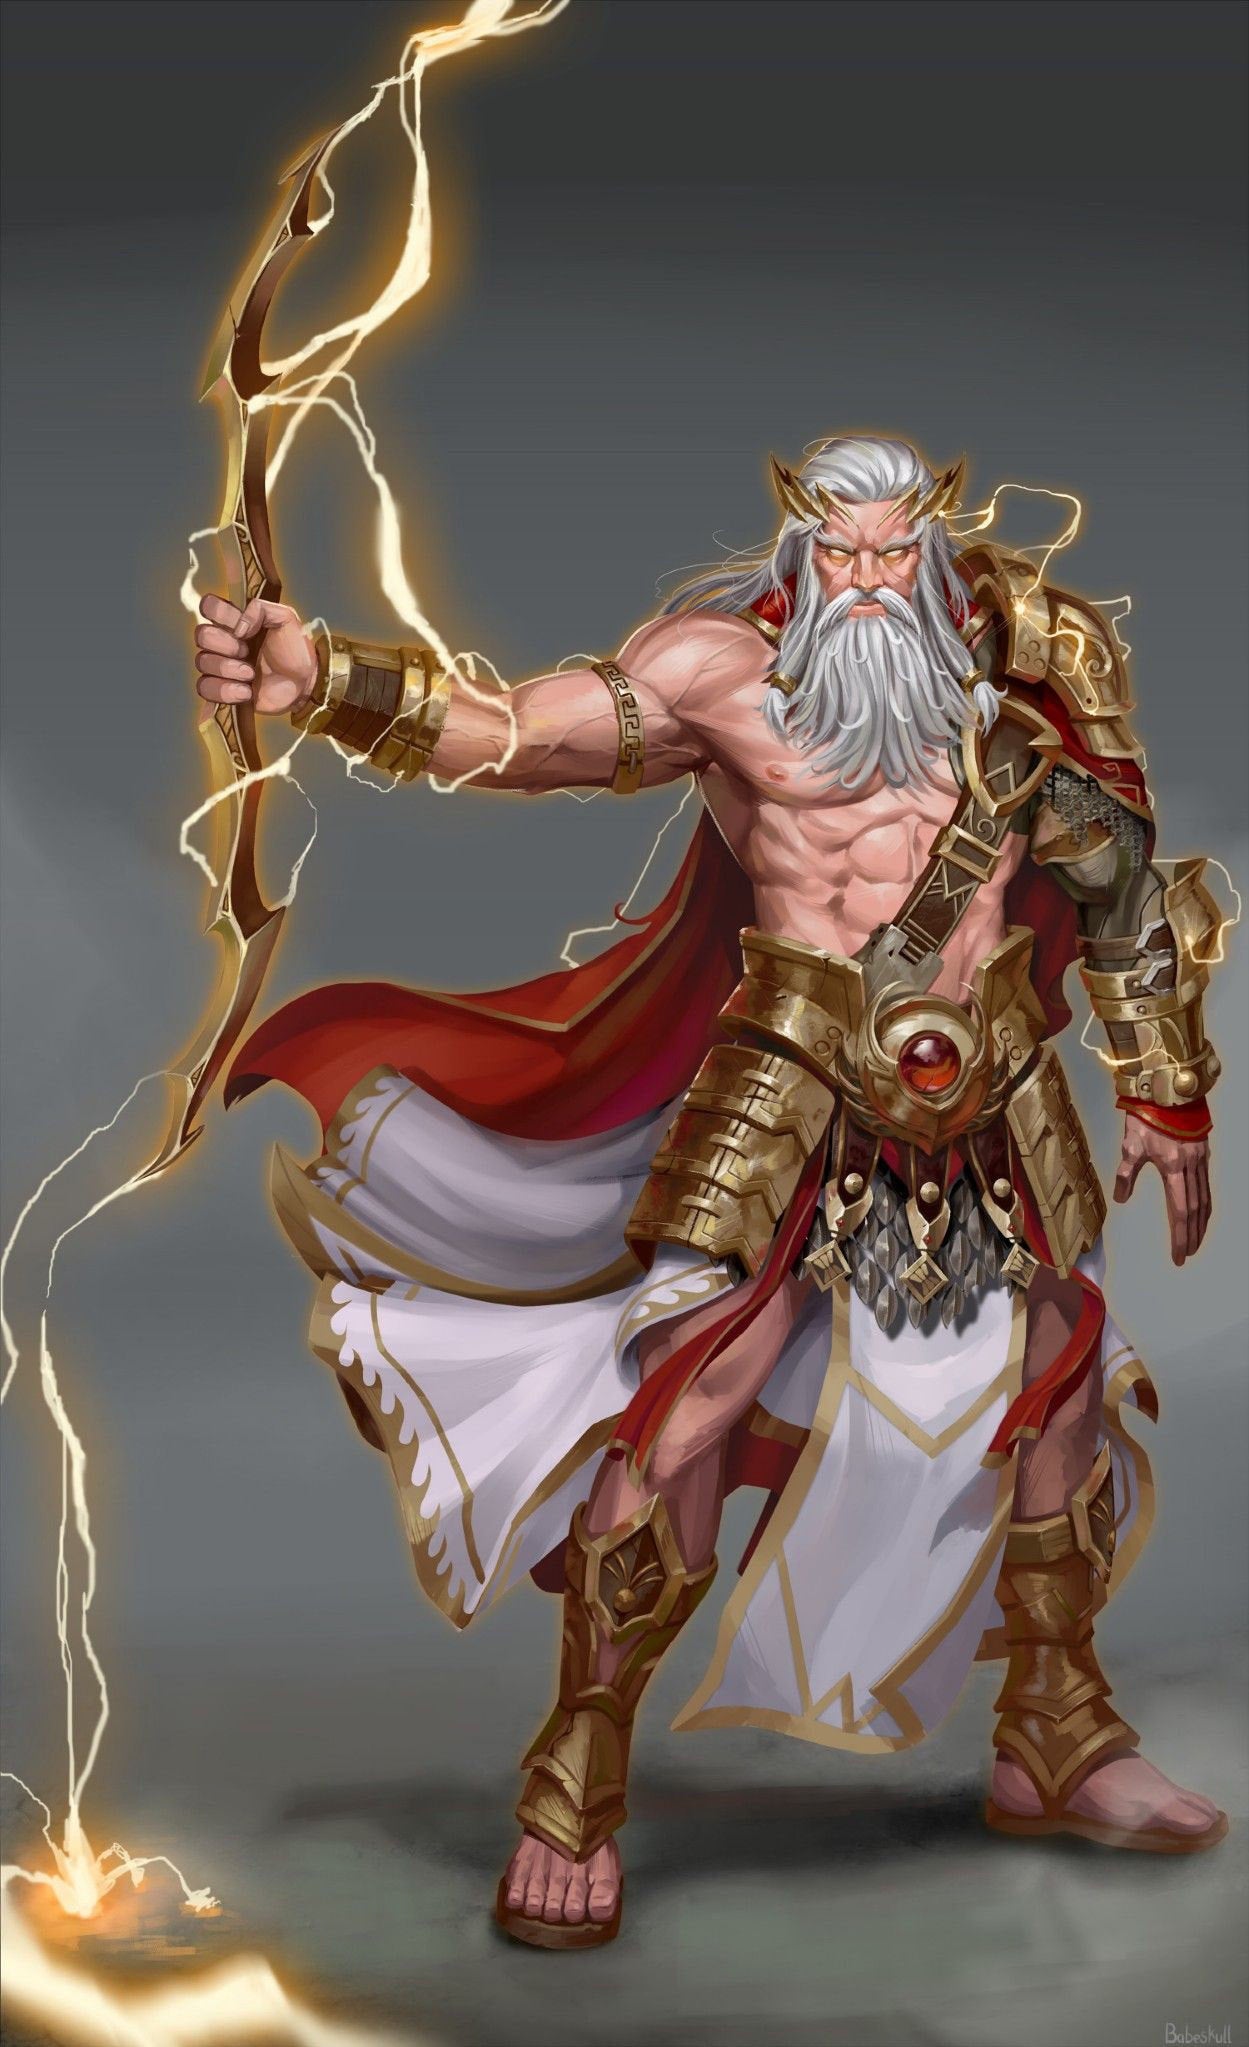 Zeus lightning bolt, Greek mythology, lightning bolt, Greek god, sword, thunder, trident, Zeus, lightning, thunderbolt, cosplay, Christmas